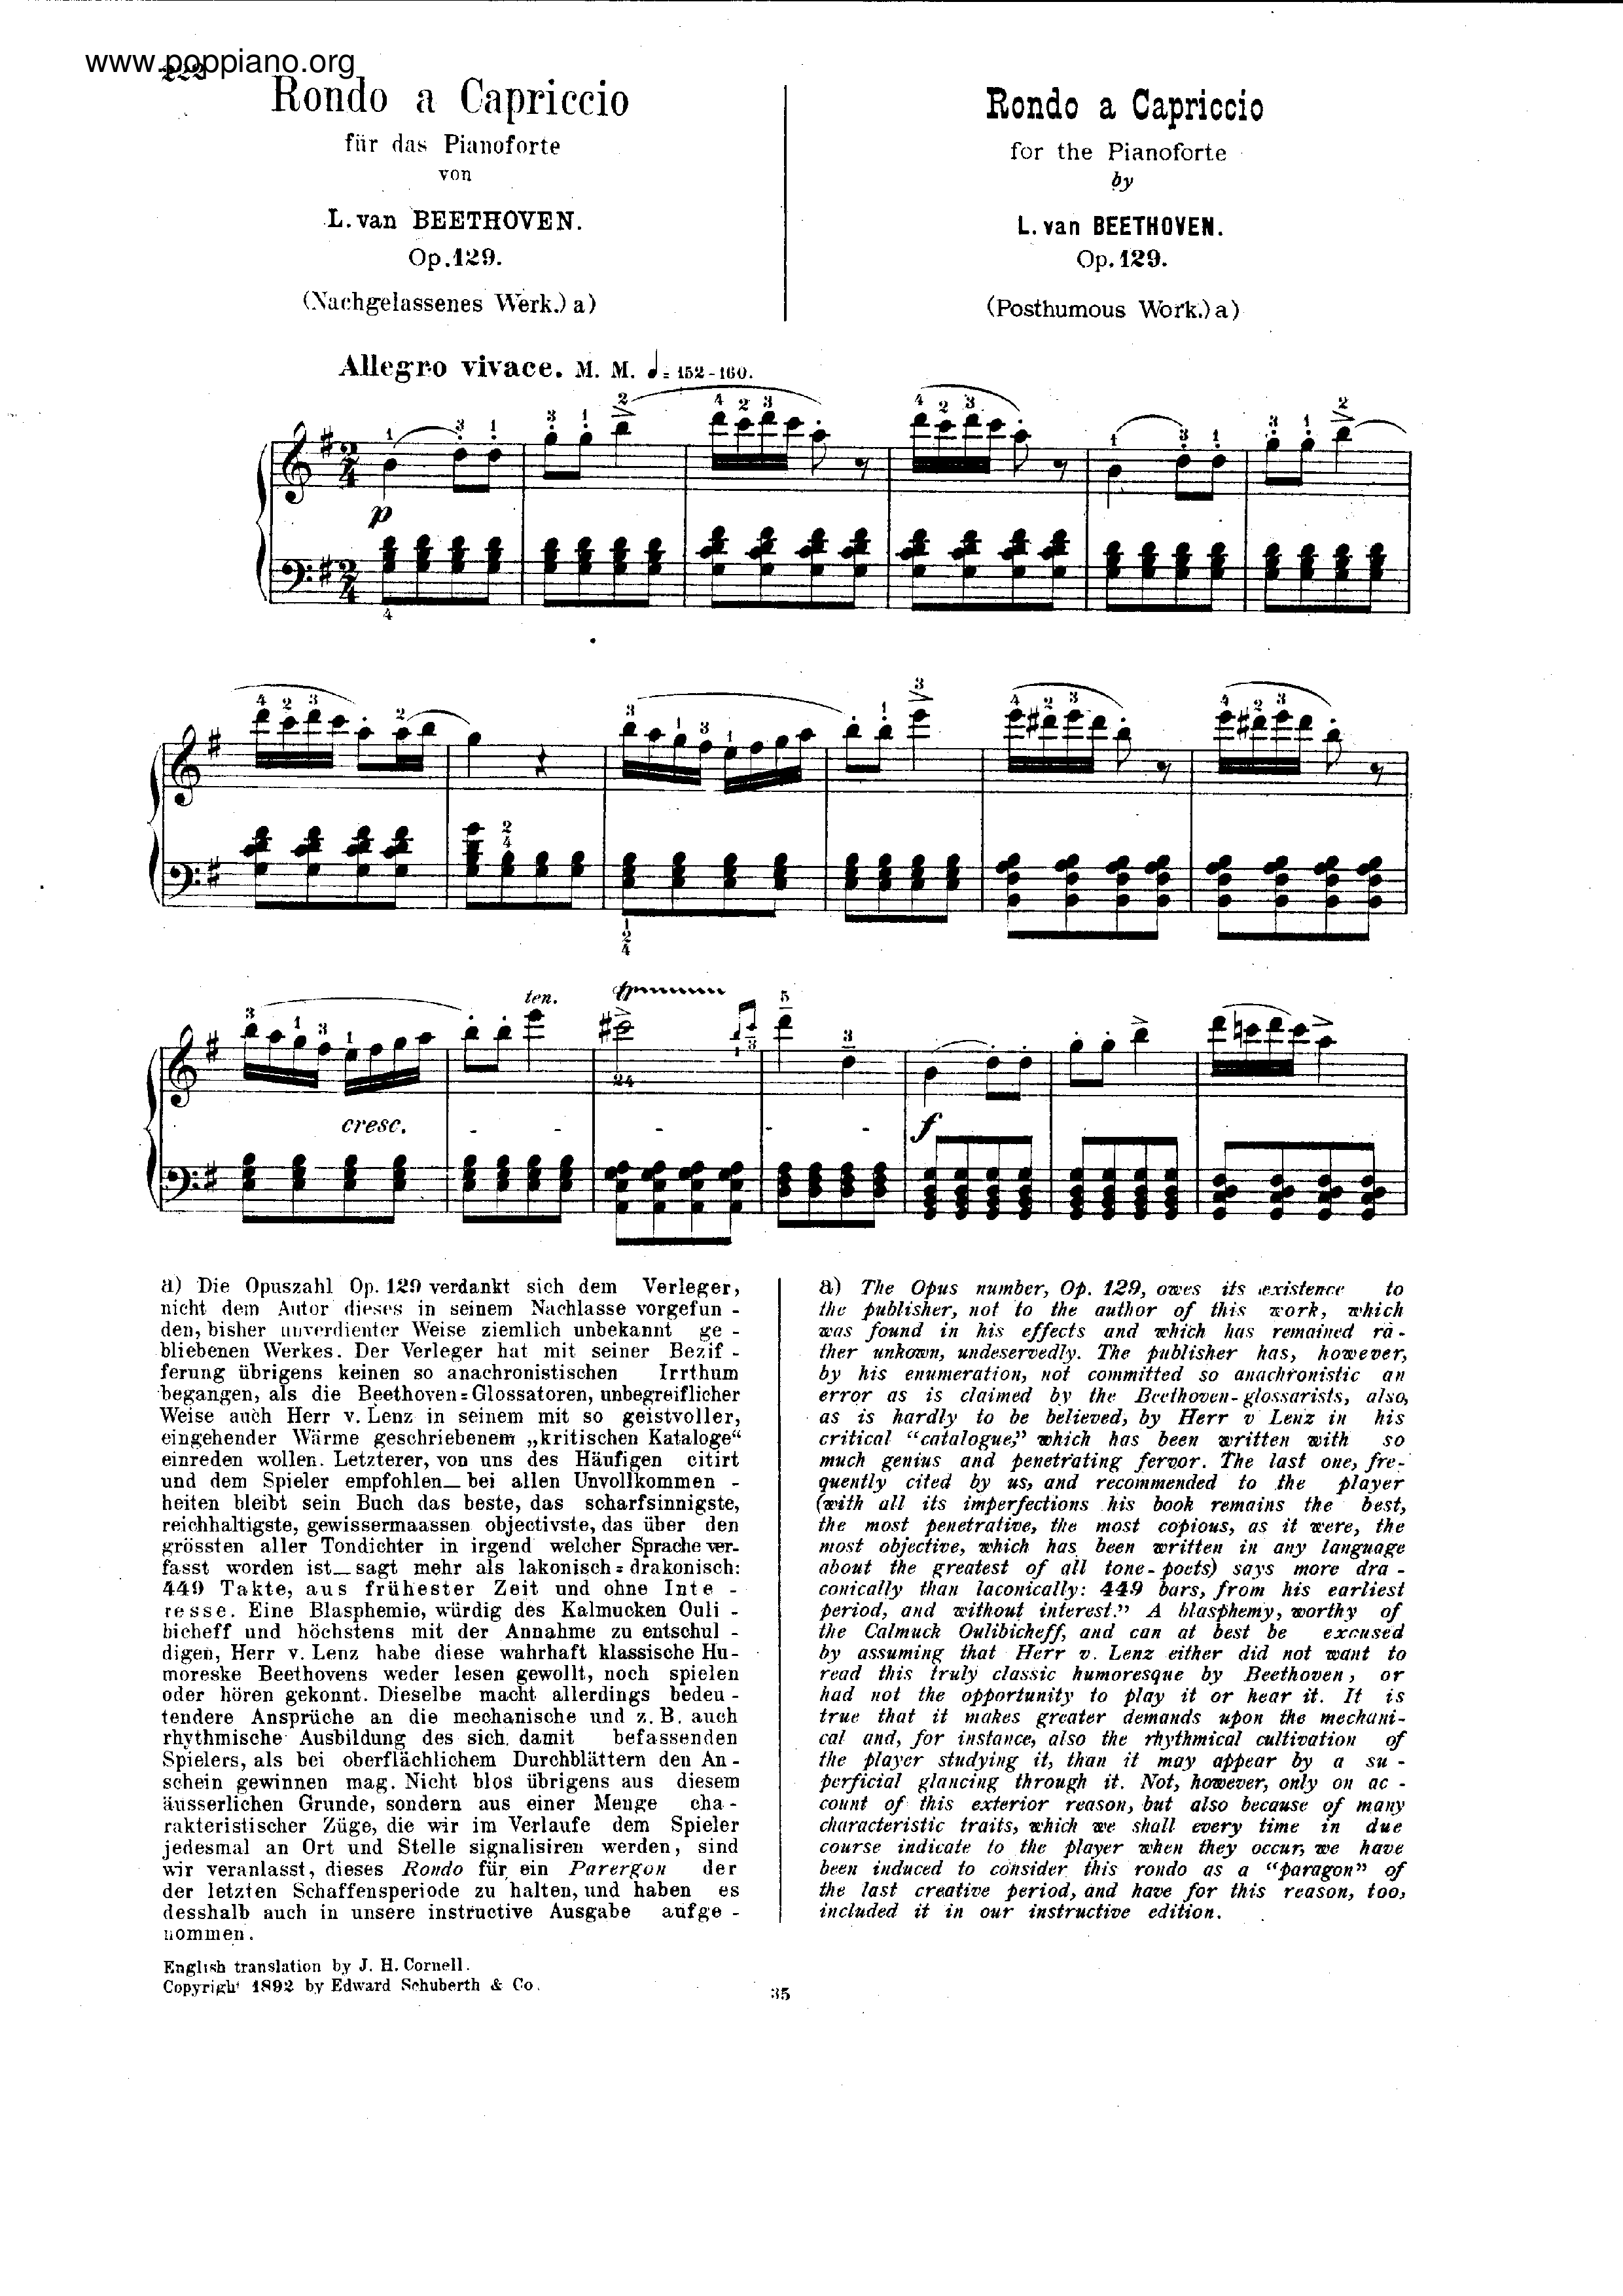 Rondo a Capriccio Op. 129ピアノ譜